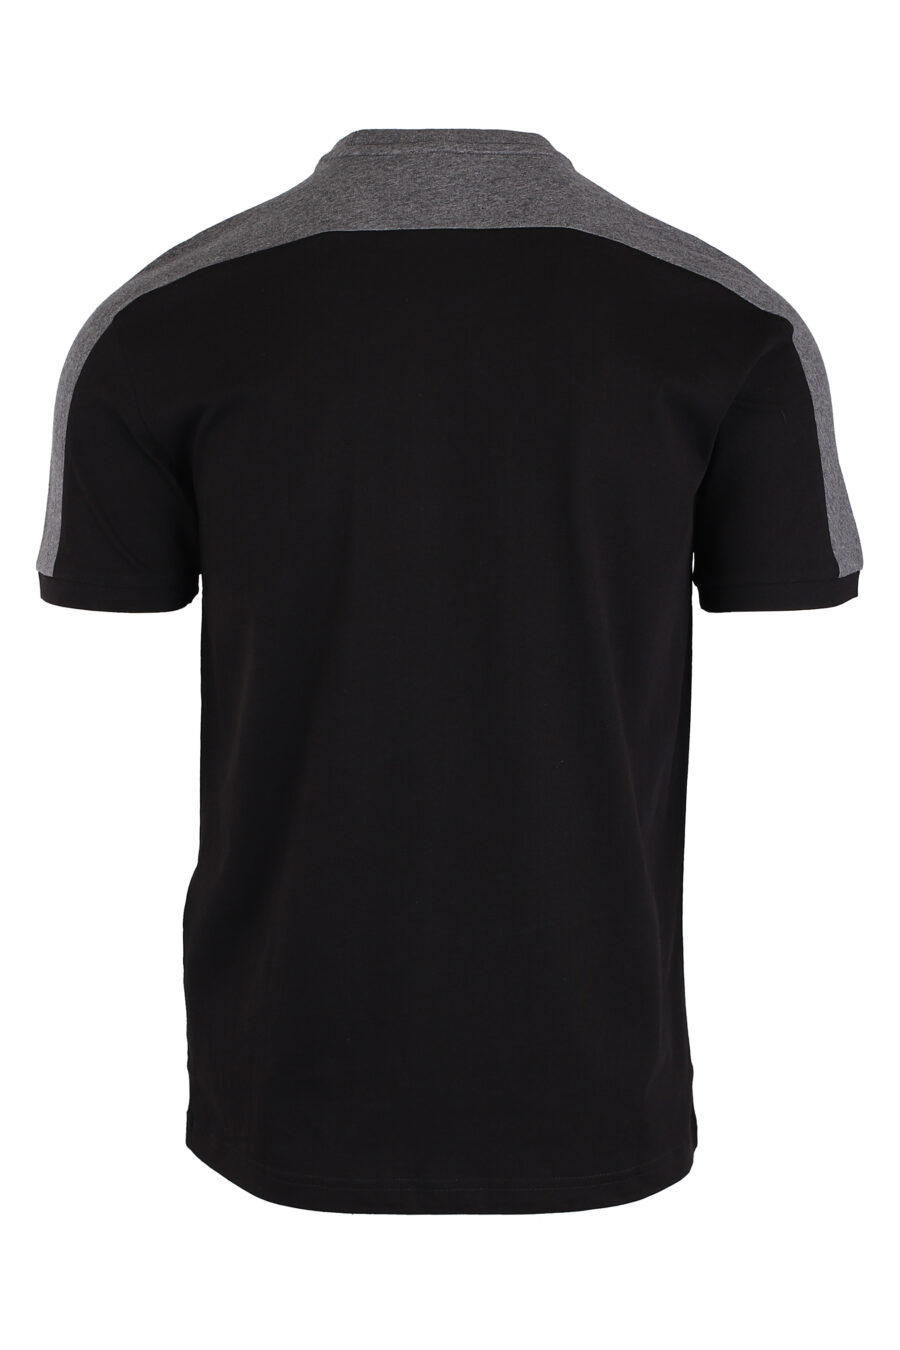 T-shirt preta com cinzento e logótipo "lux identity" - IMG 4152